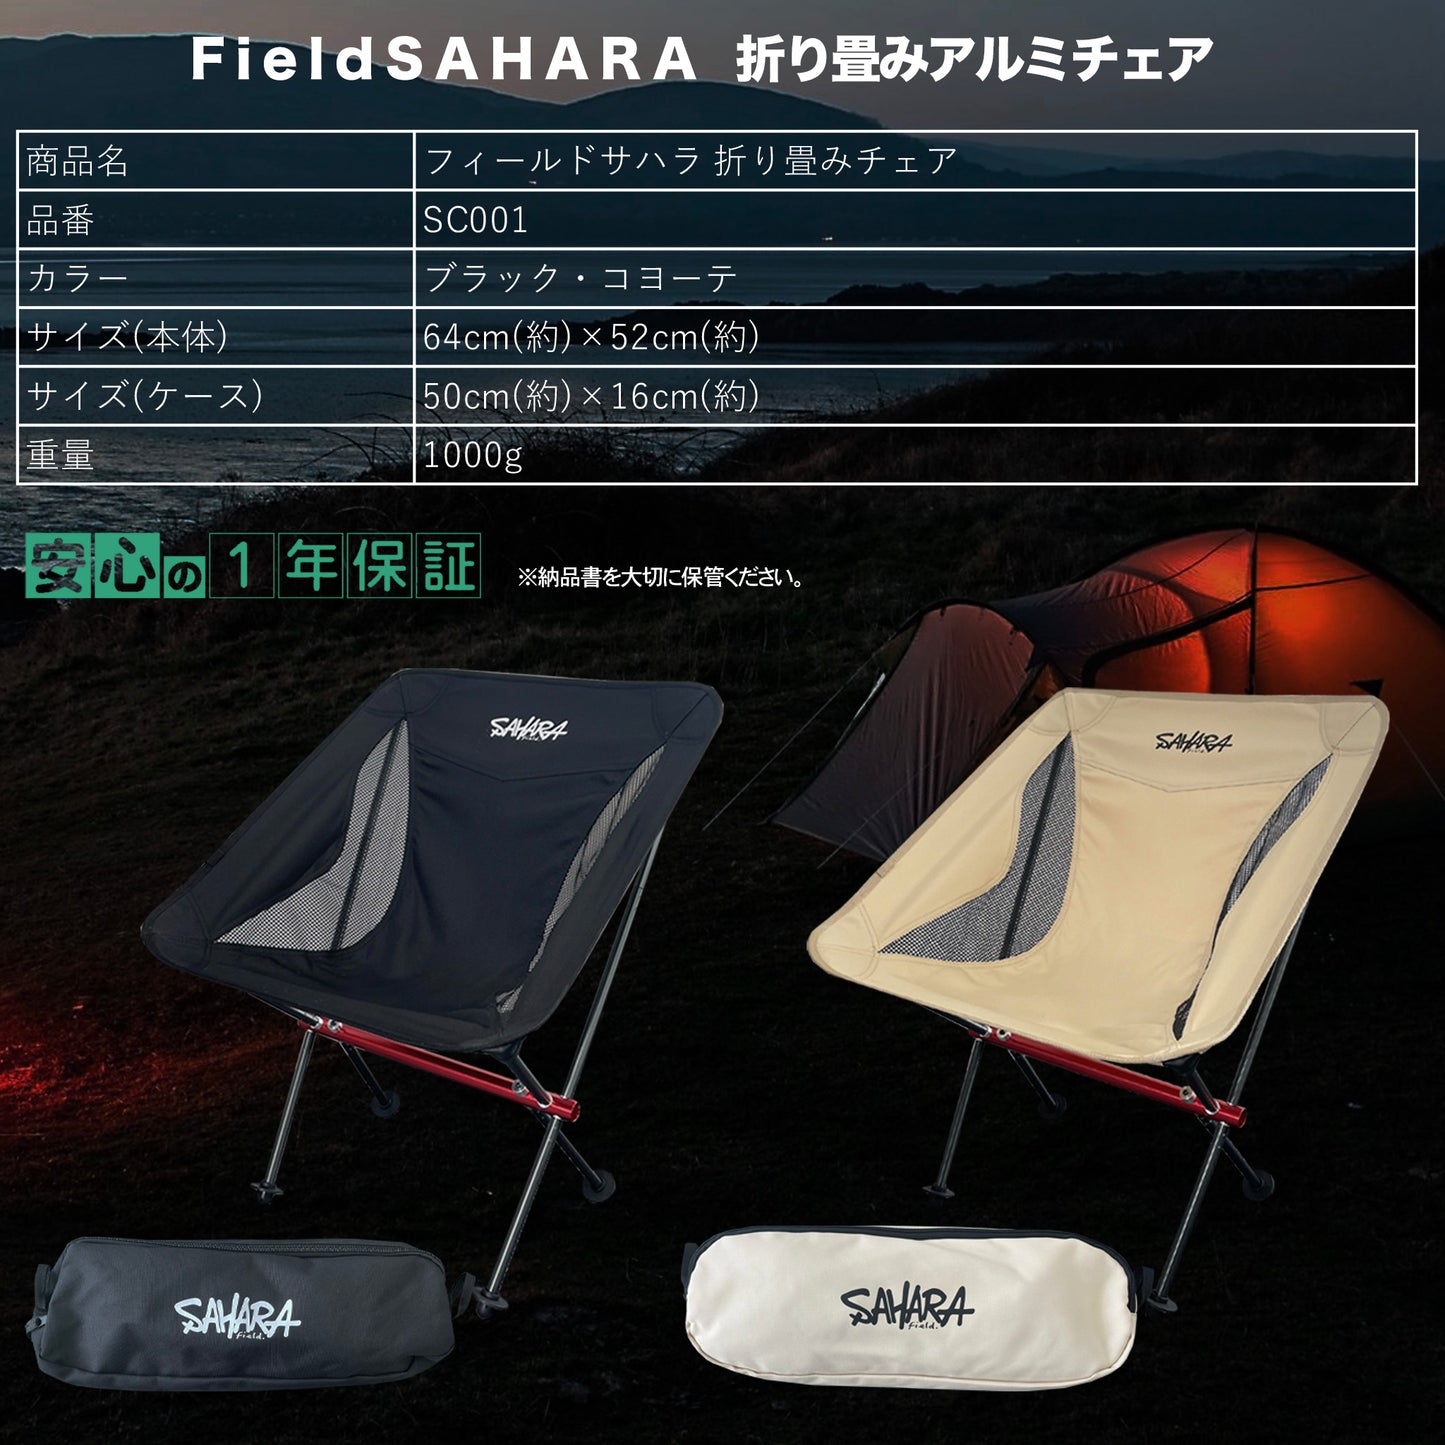 FieldSAHARA SC001 折りたたみアルミチェア - FieldSAHARA